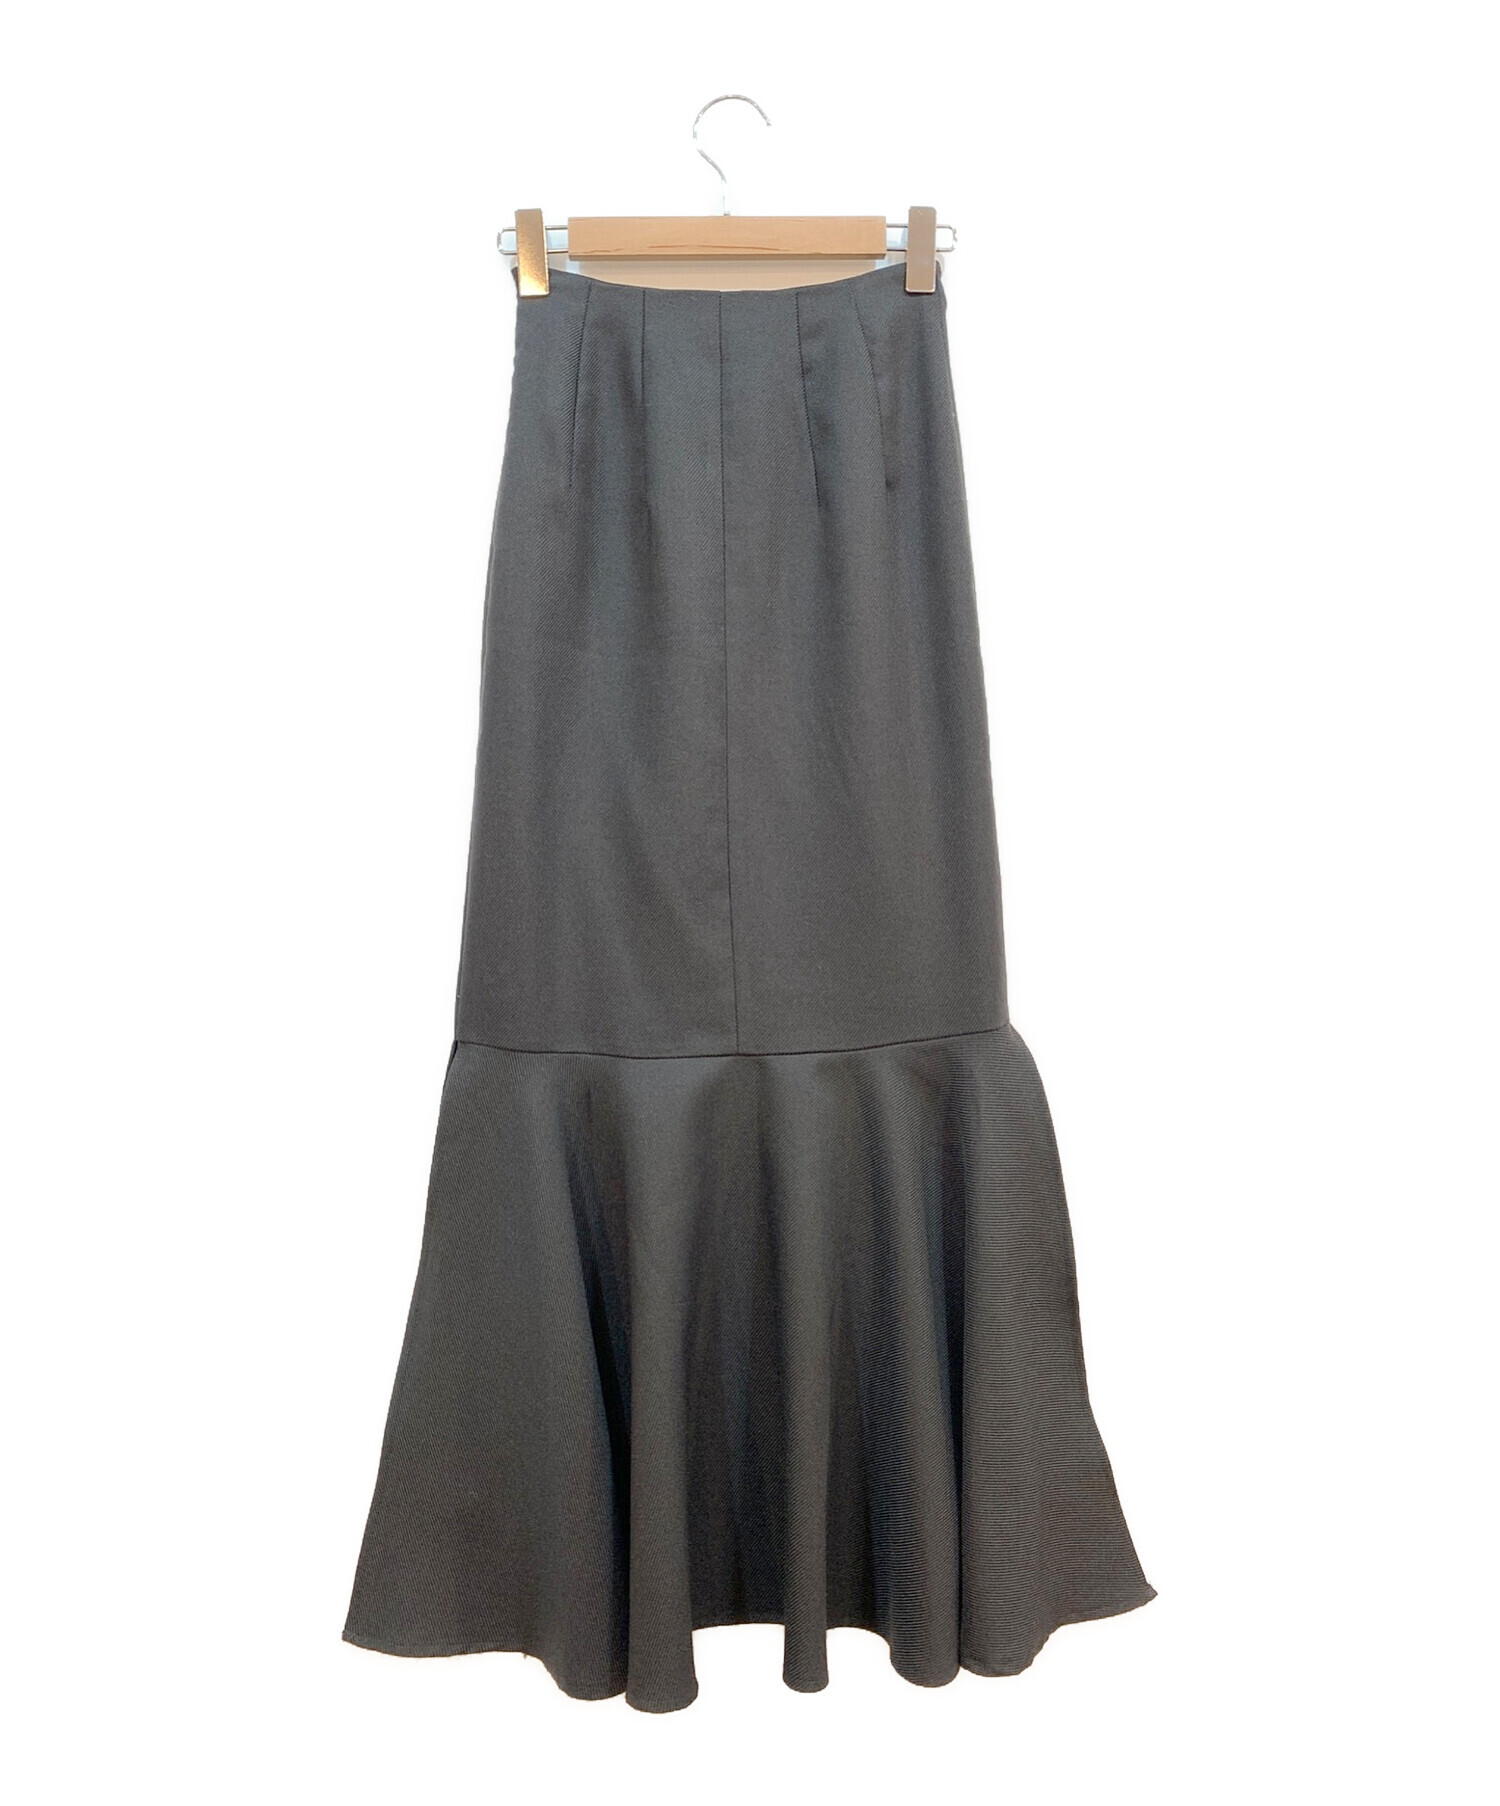 Cla STEllaR (クラステラー) ロングマーメイドスカート ブラック サイズ:-